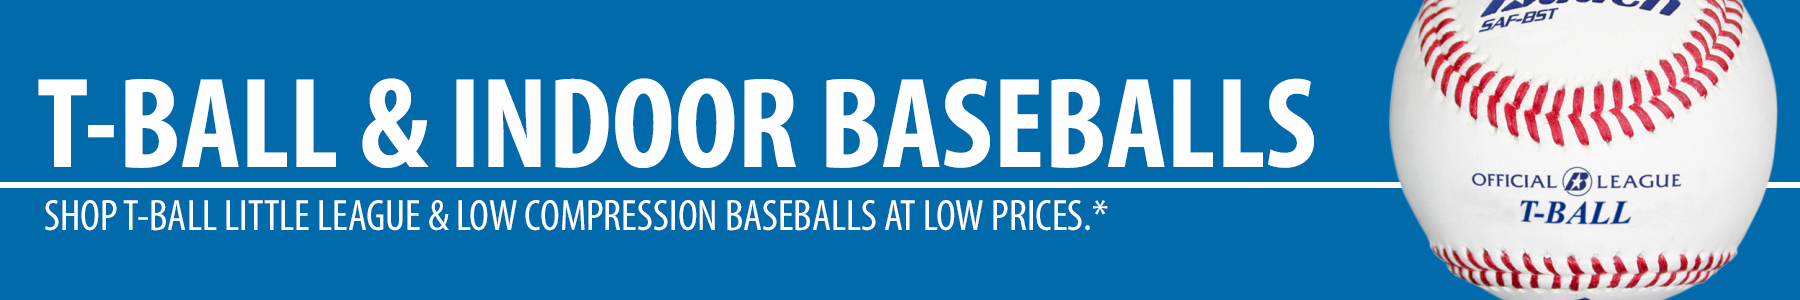 T Ball Baseballs - Low Compression Baseballs